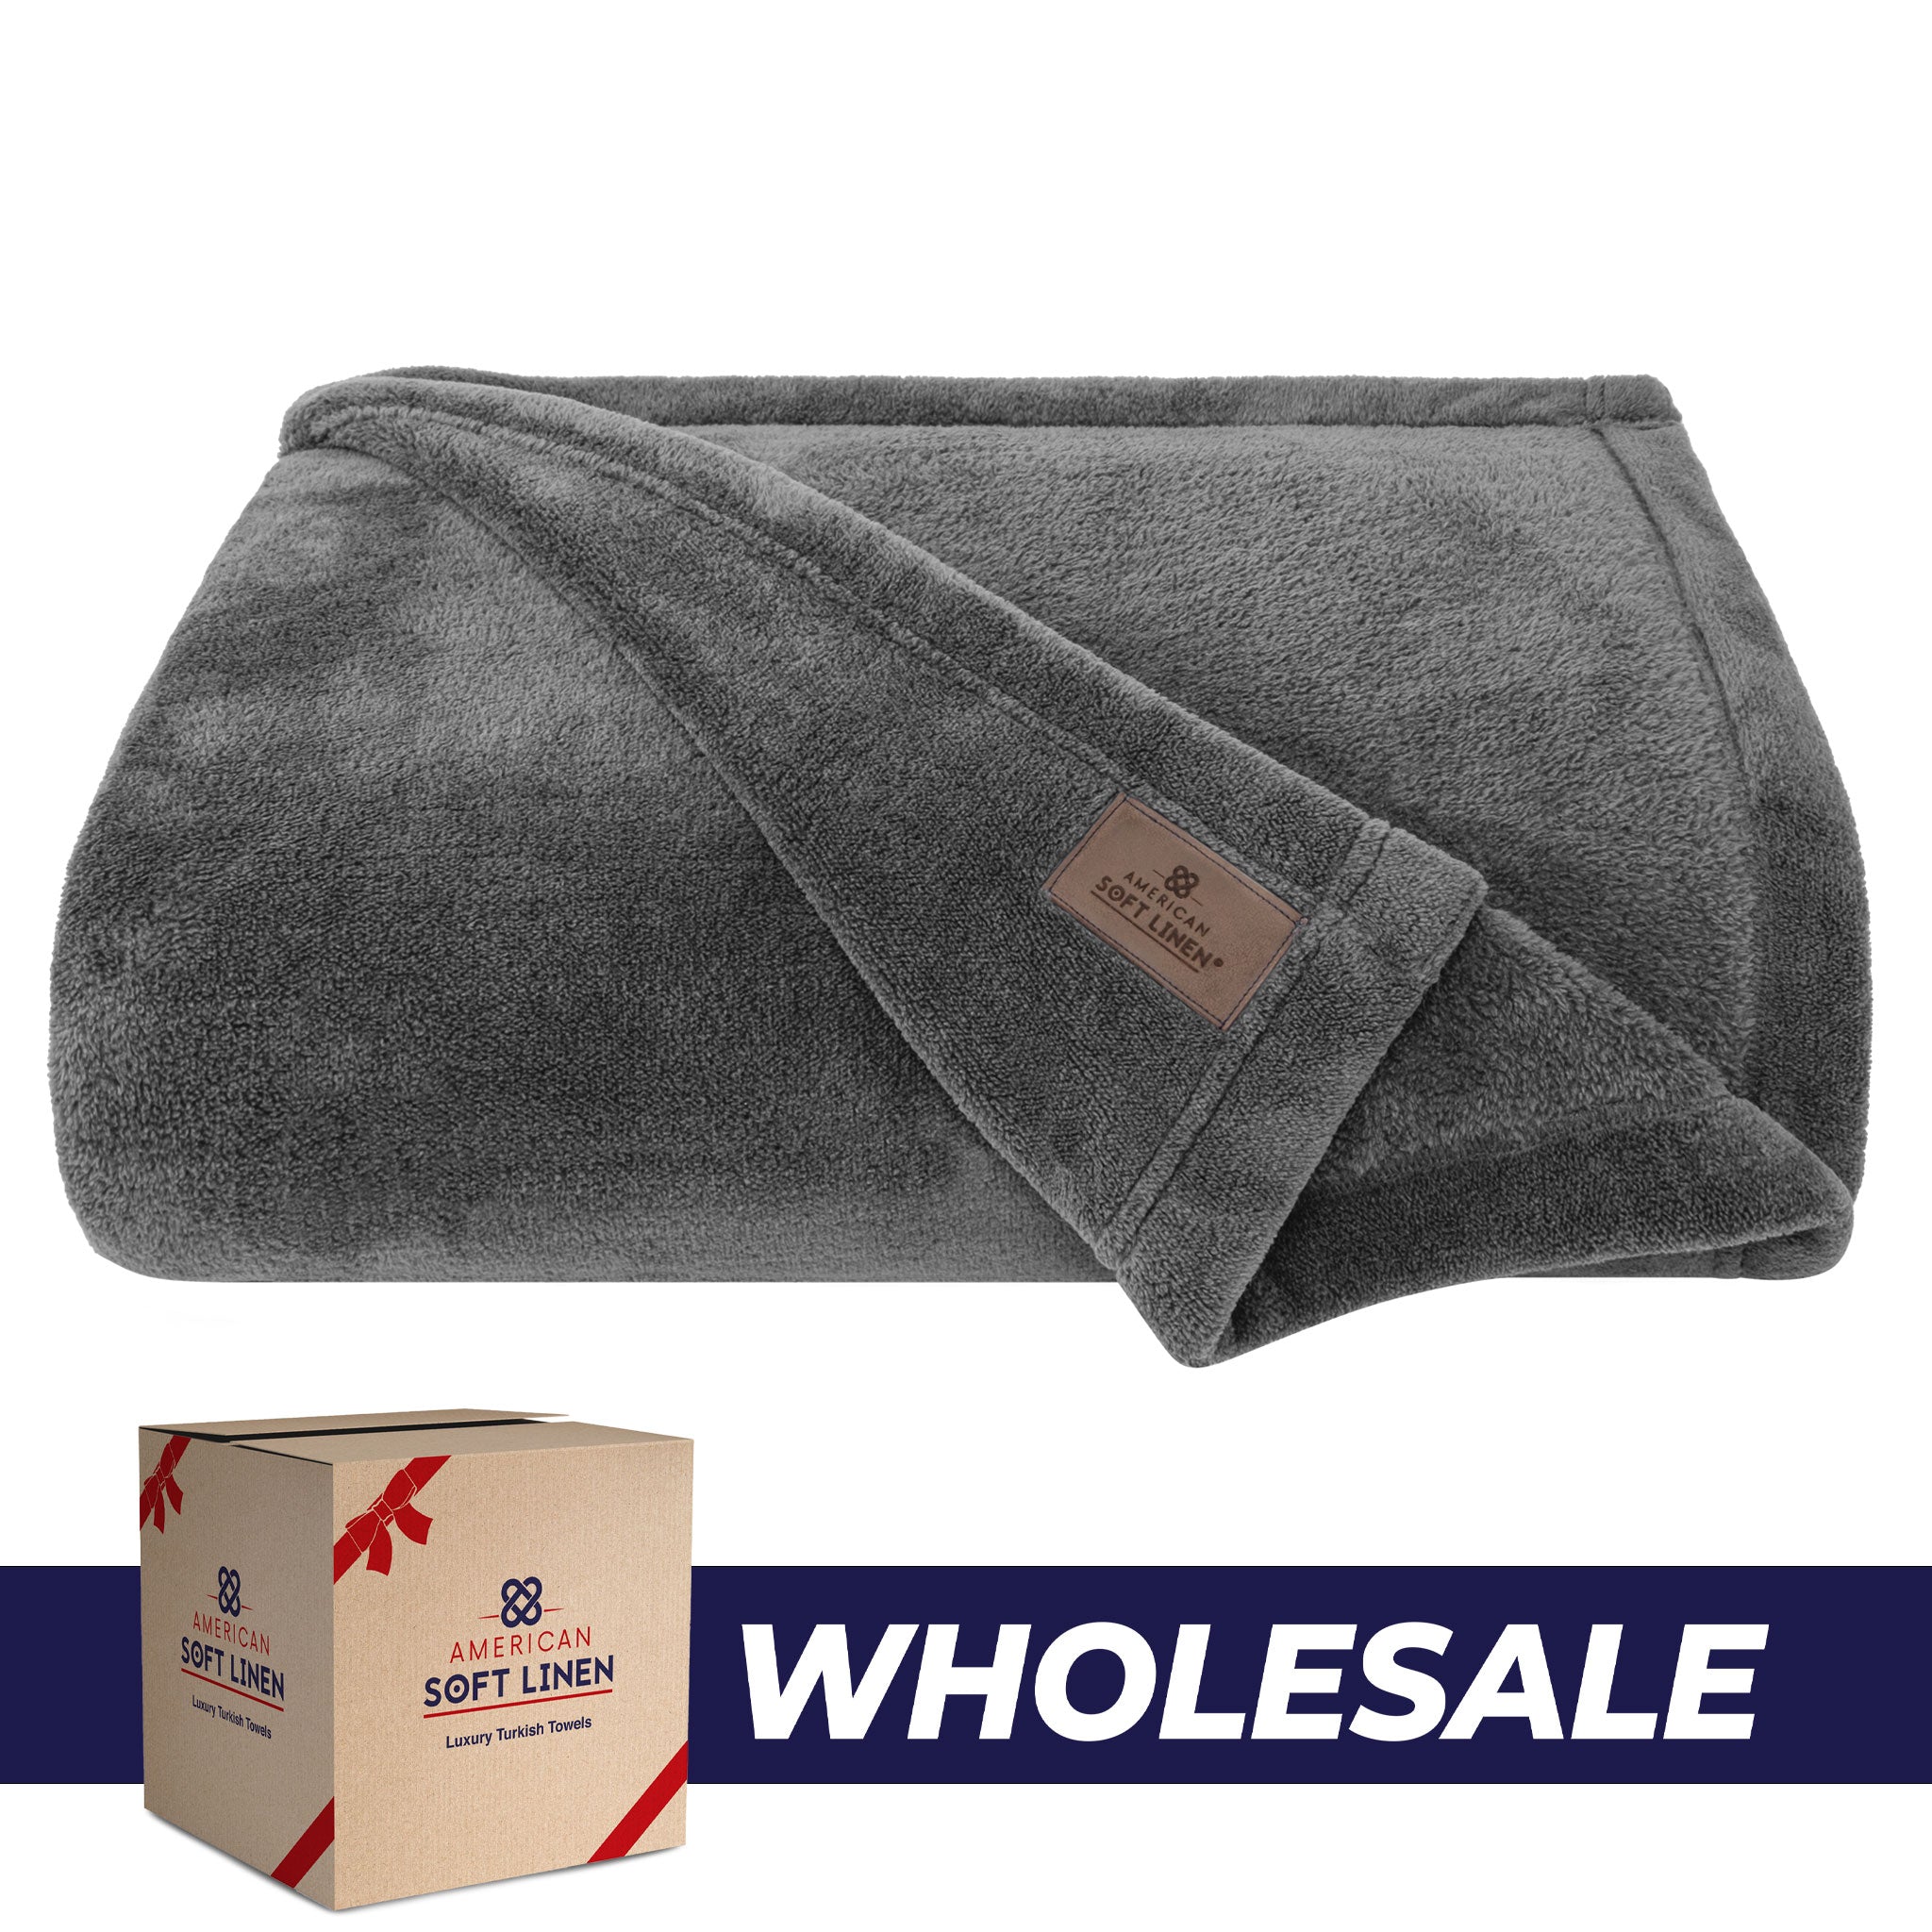 American Soft Linen - Bedding Fleece Blanket - Wholesale - 9 Set Case Pack - Queen Size 85x90 inches - Gray - 0